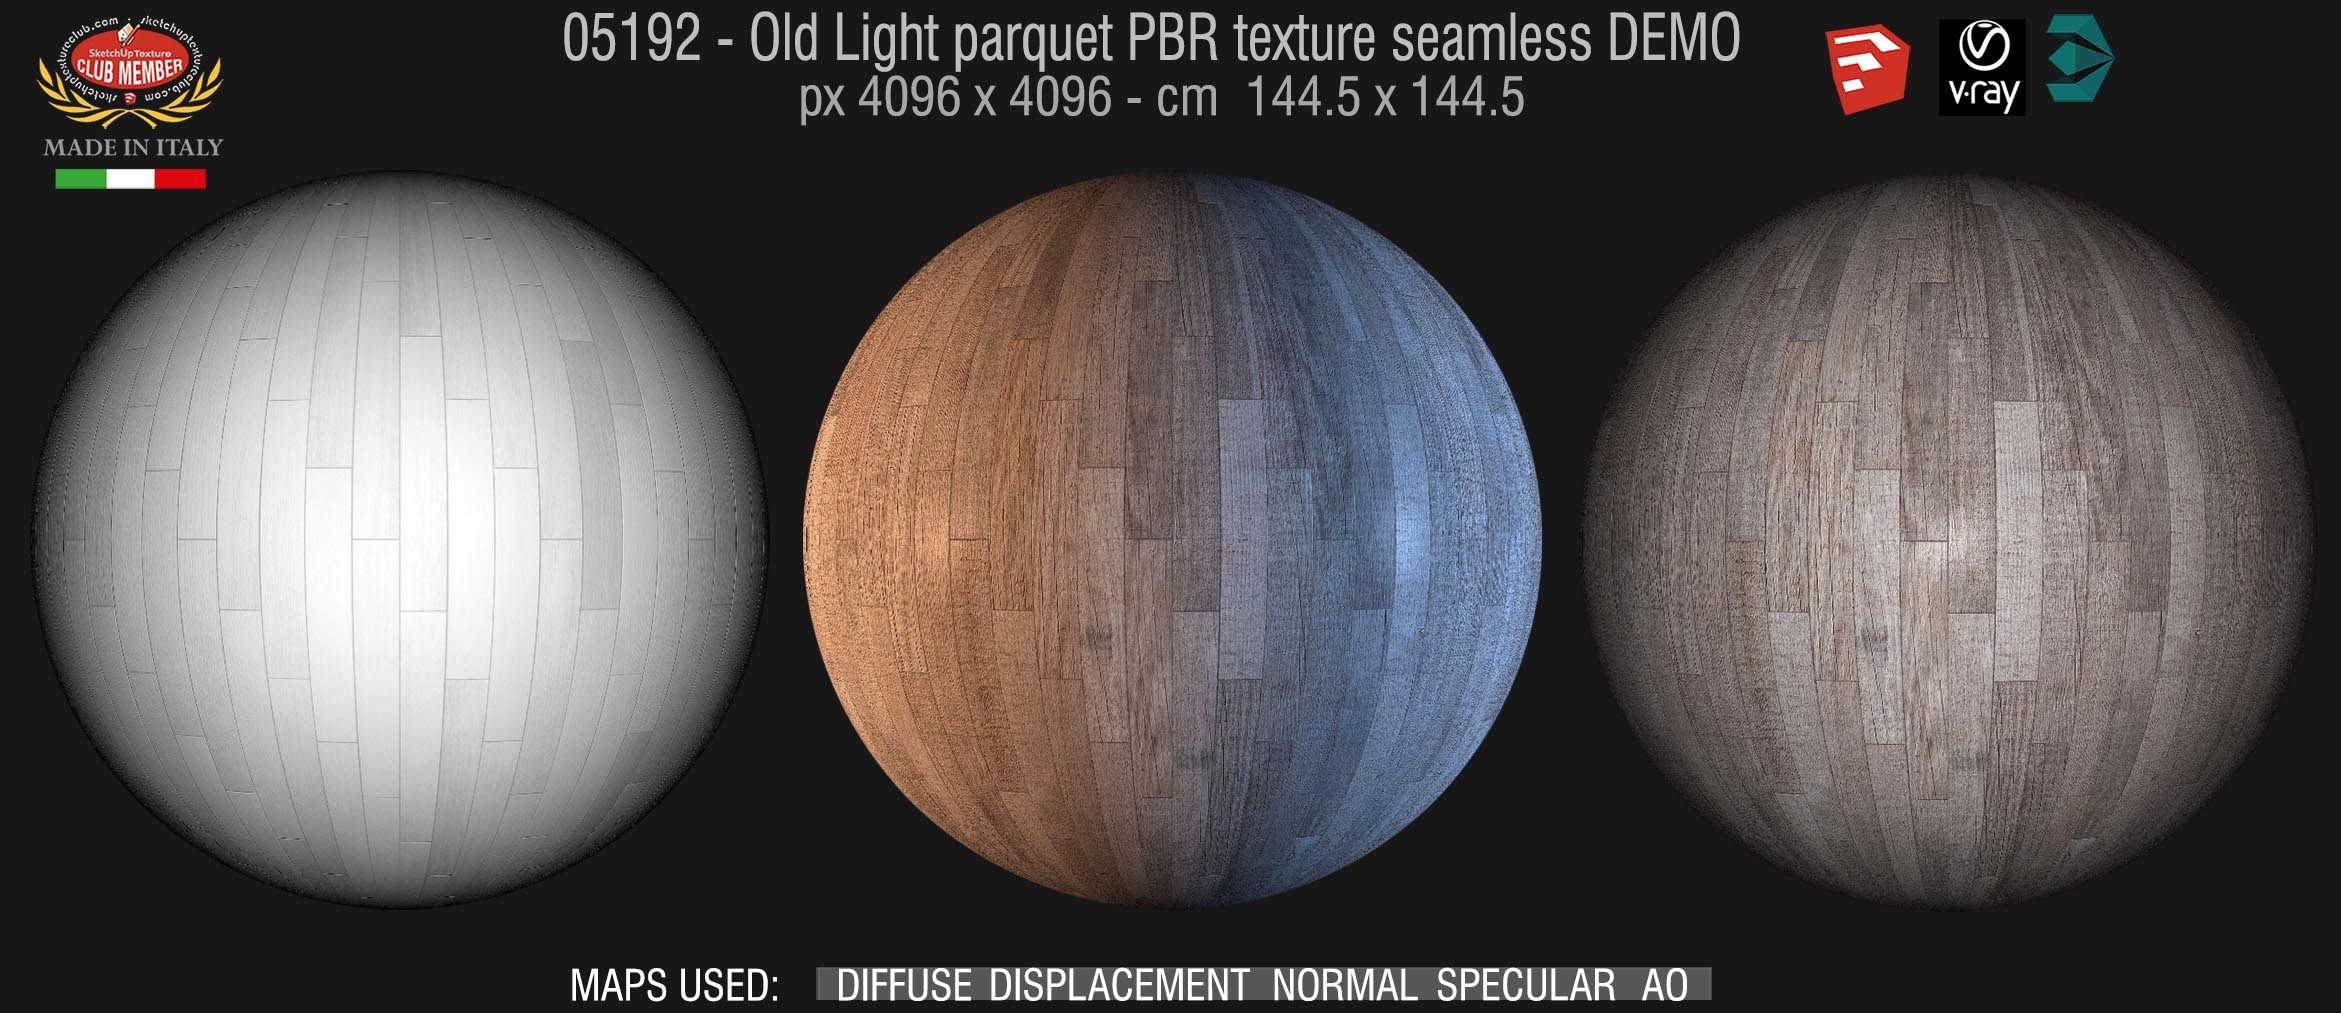 05192 Old light parquet PBR texture seamless DEMO